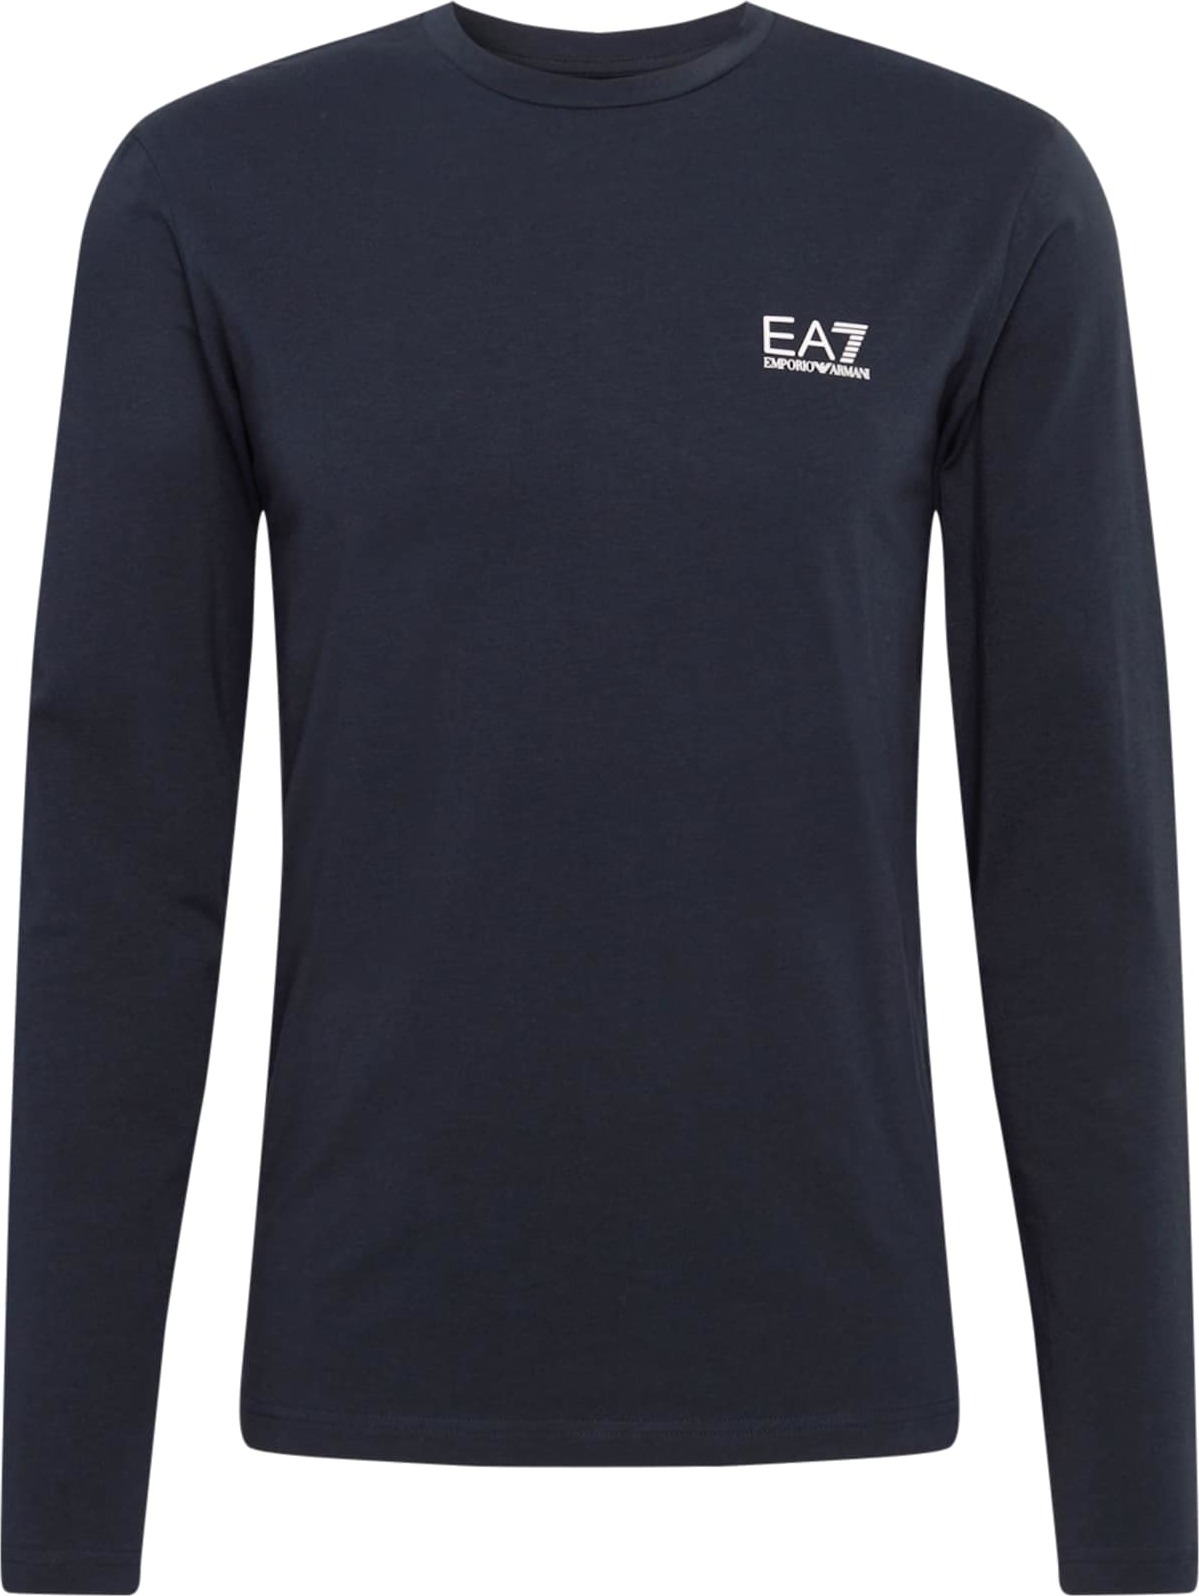 Tričko EA7 Emporio Armani marine modrá / bílá